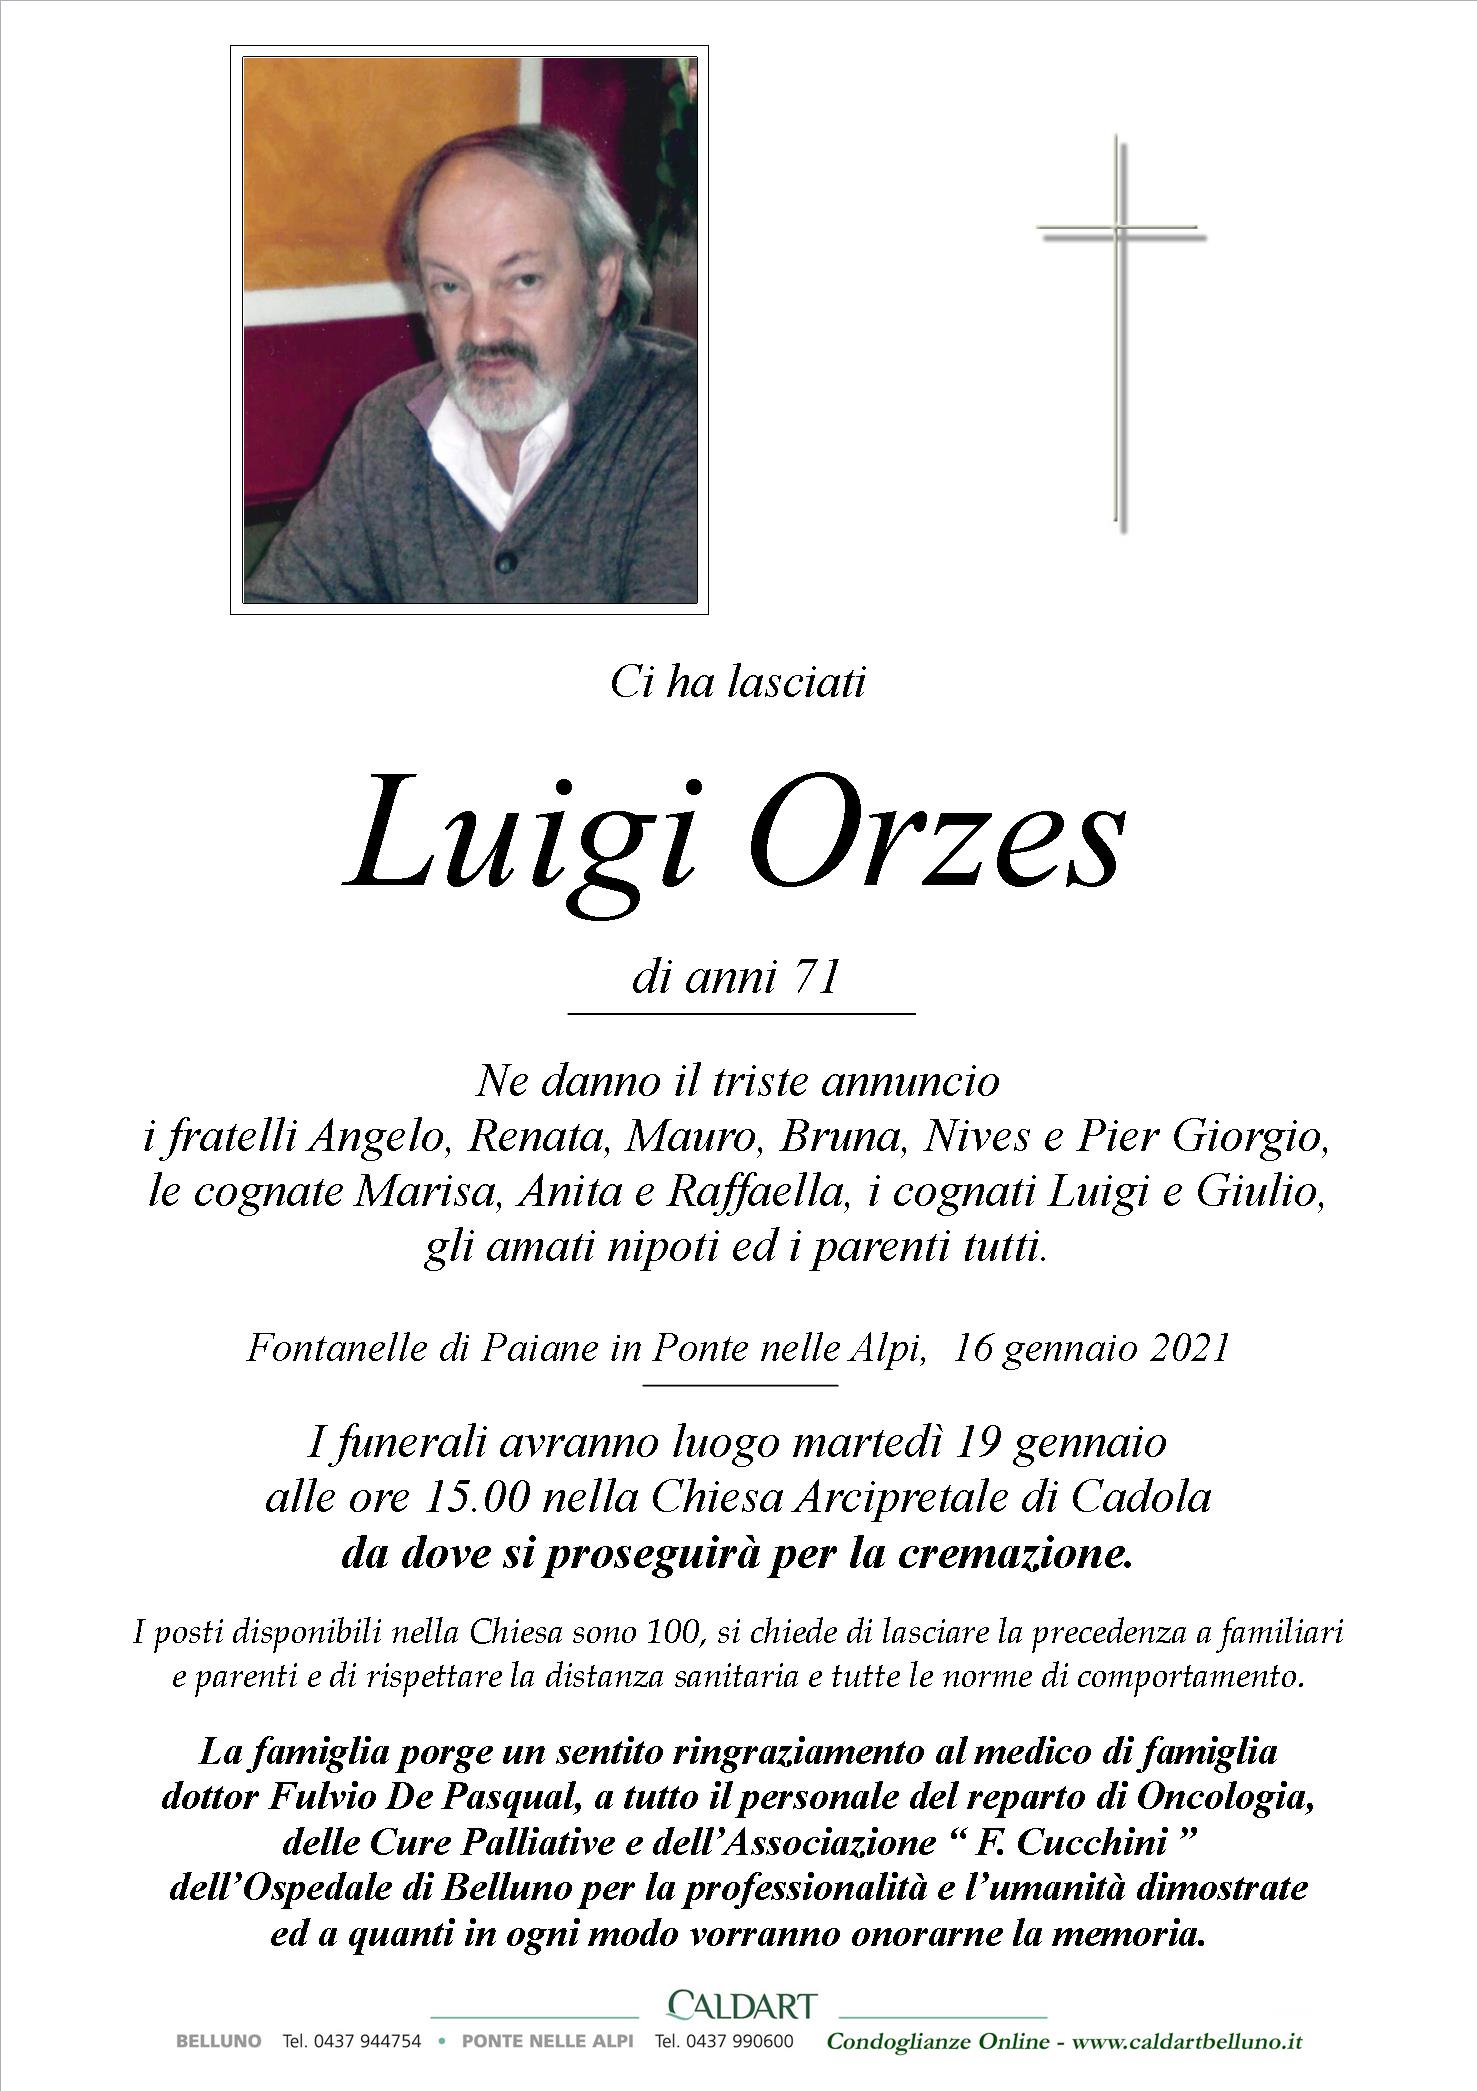 Orzes Luigi